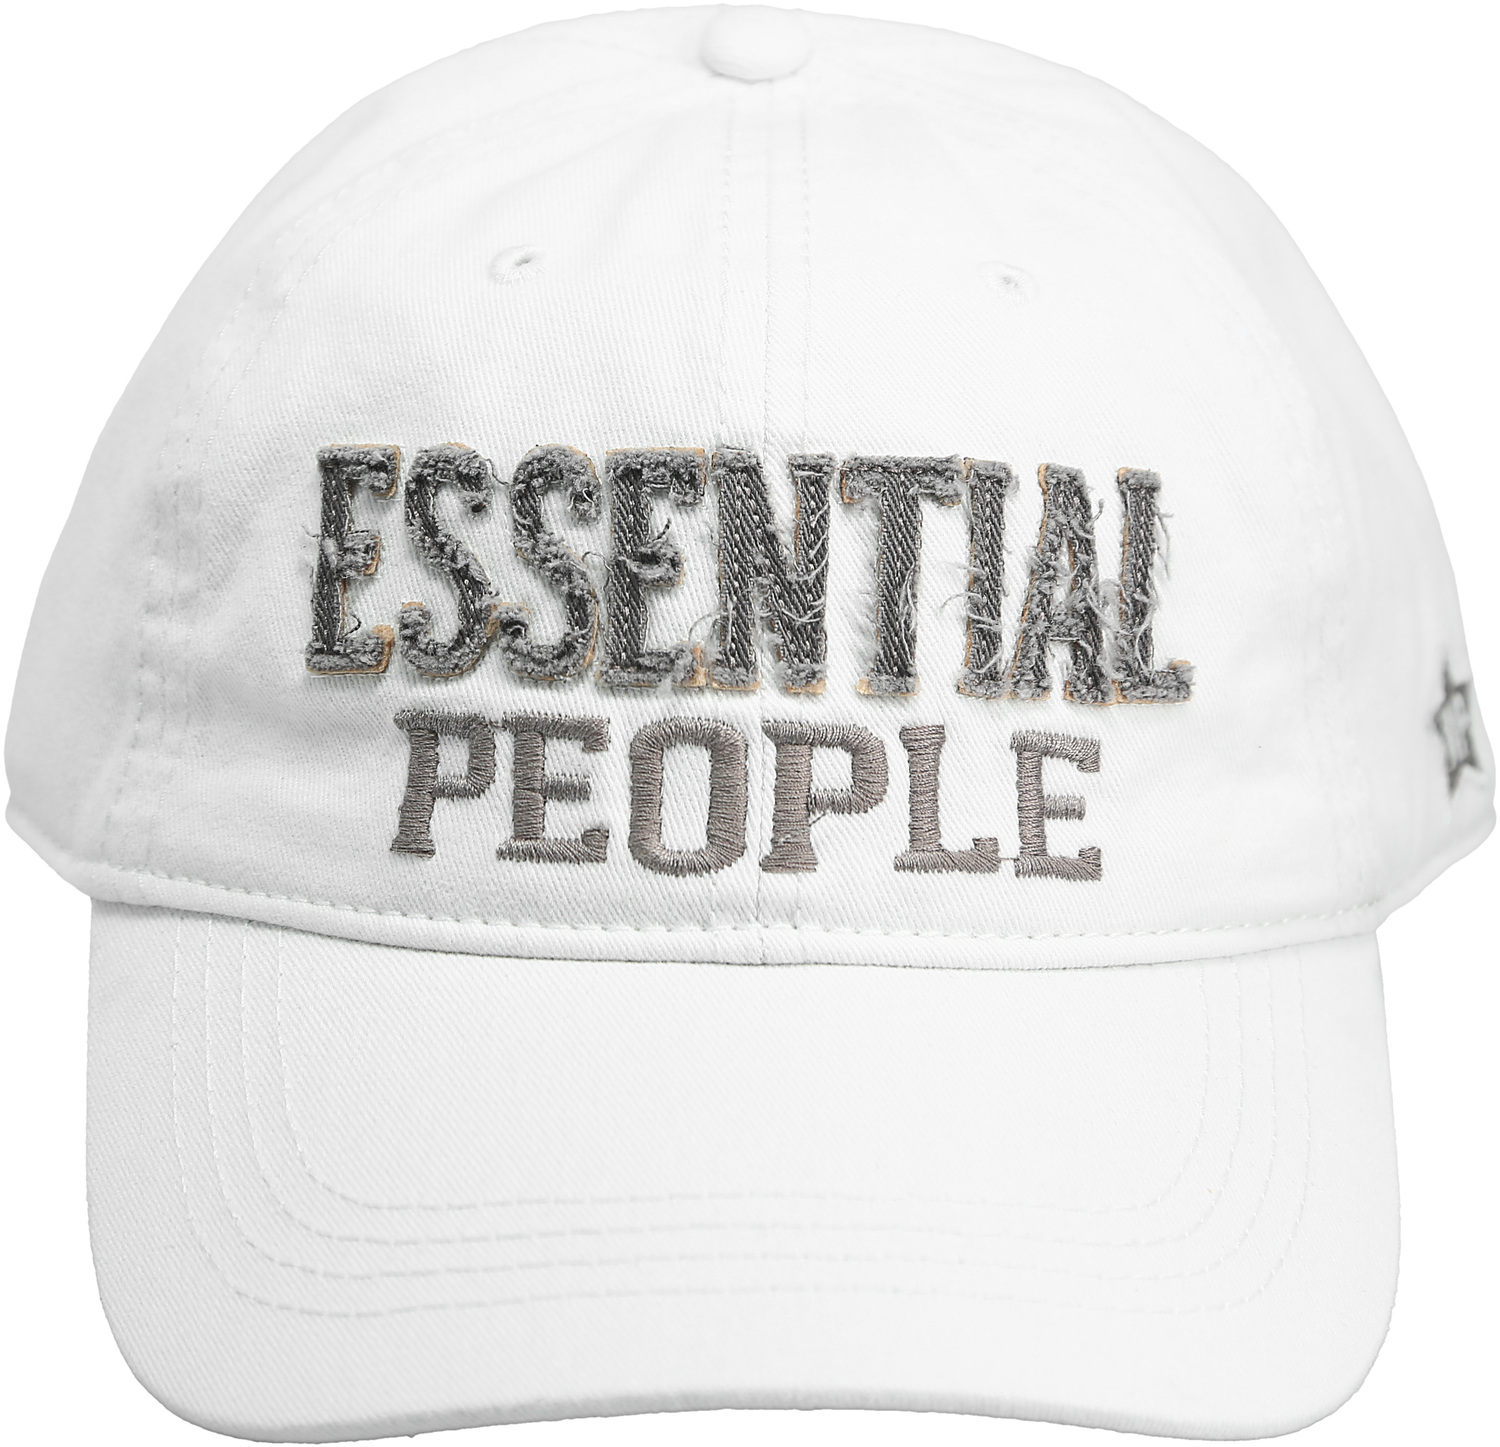 Essential People by We People - Essential People - White Adjustable Hat